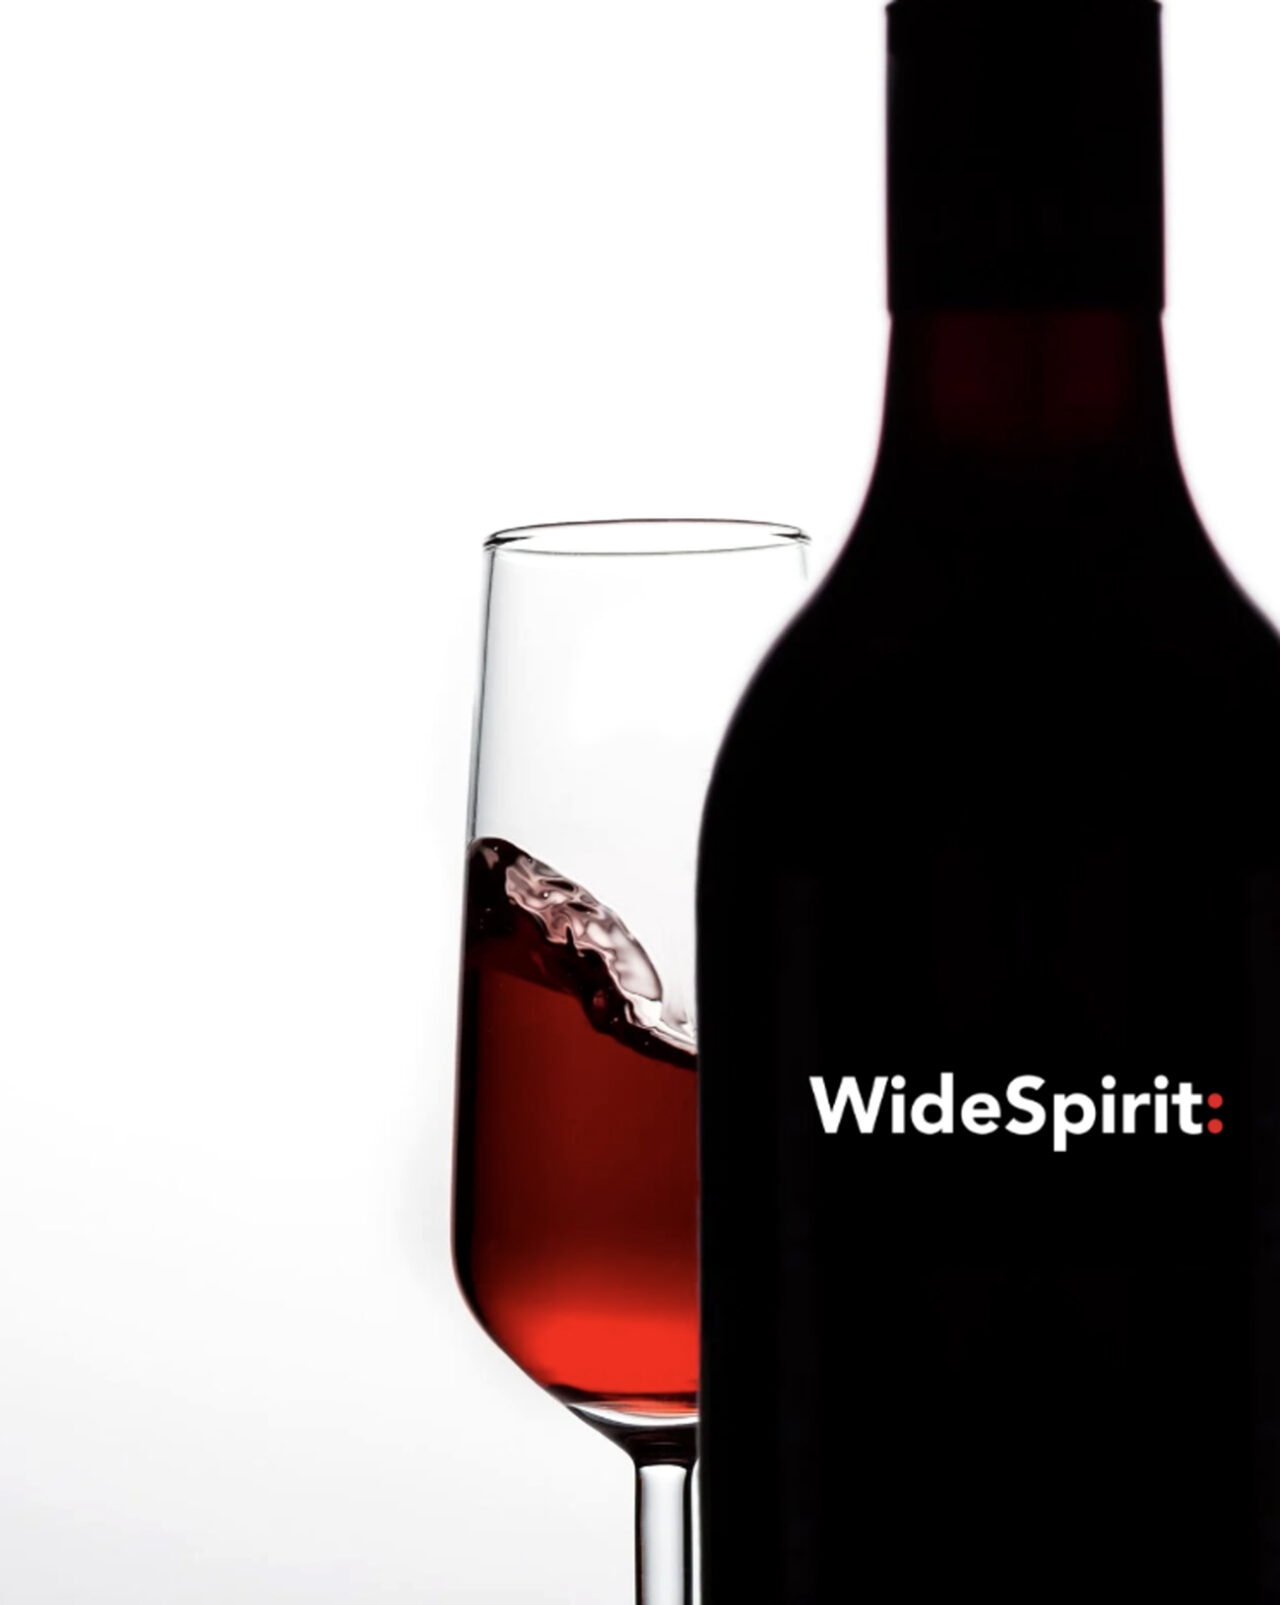 WideSpirit, Magazine di idee per la wine & spirits industry